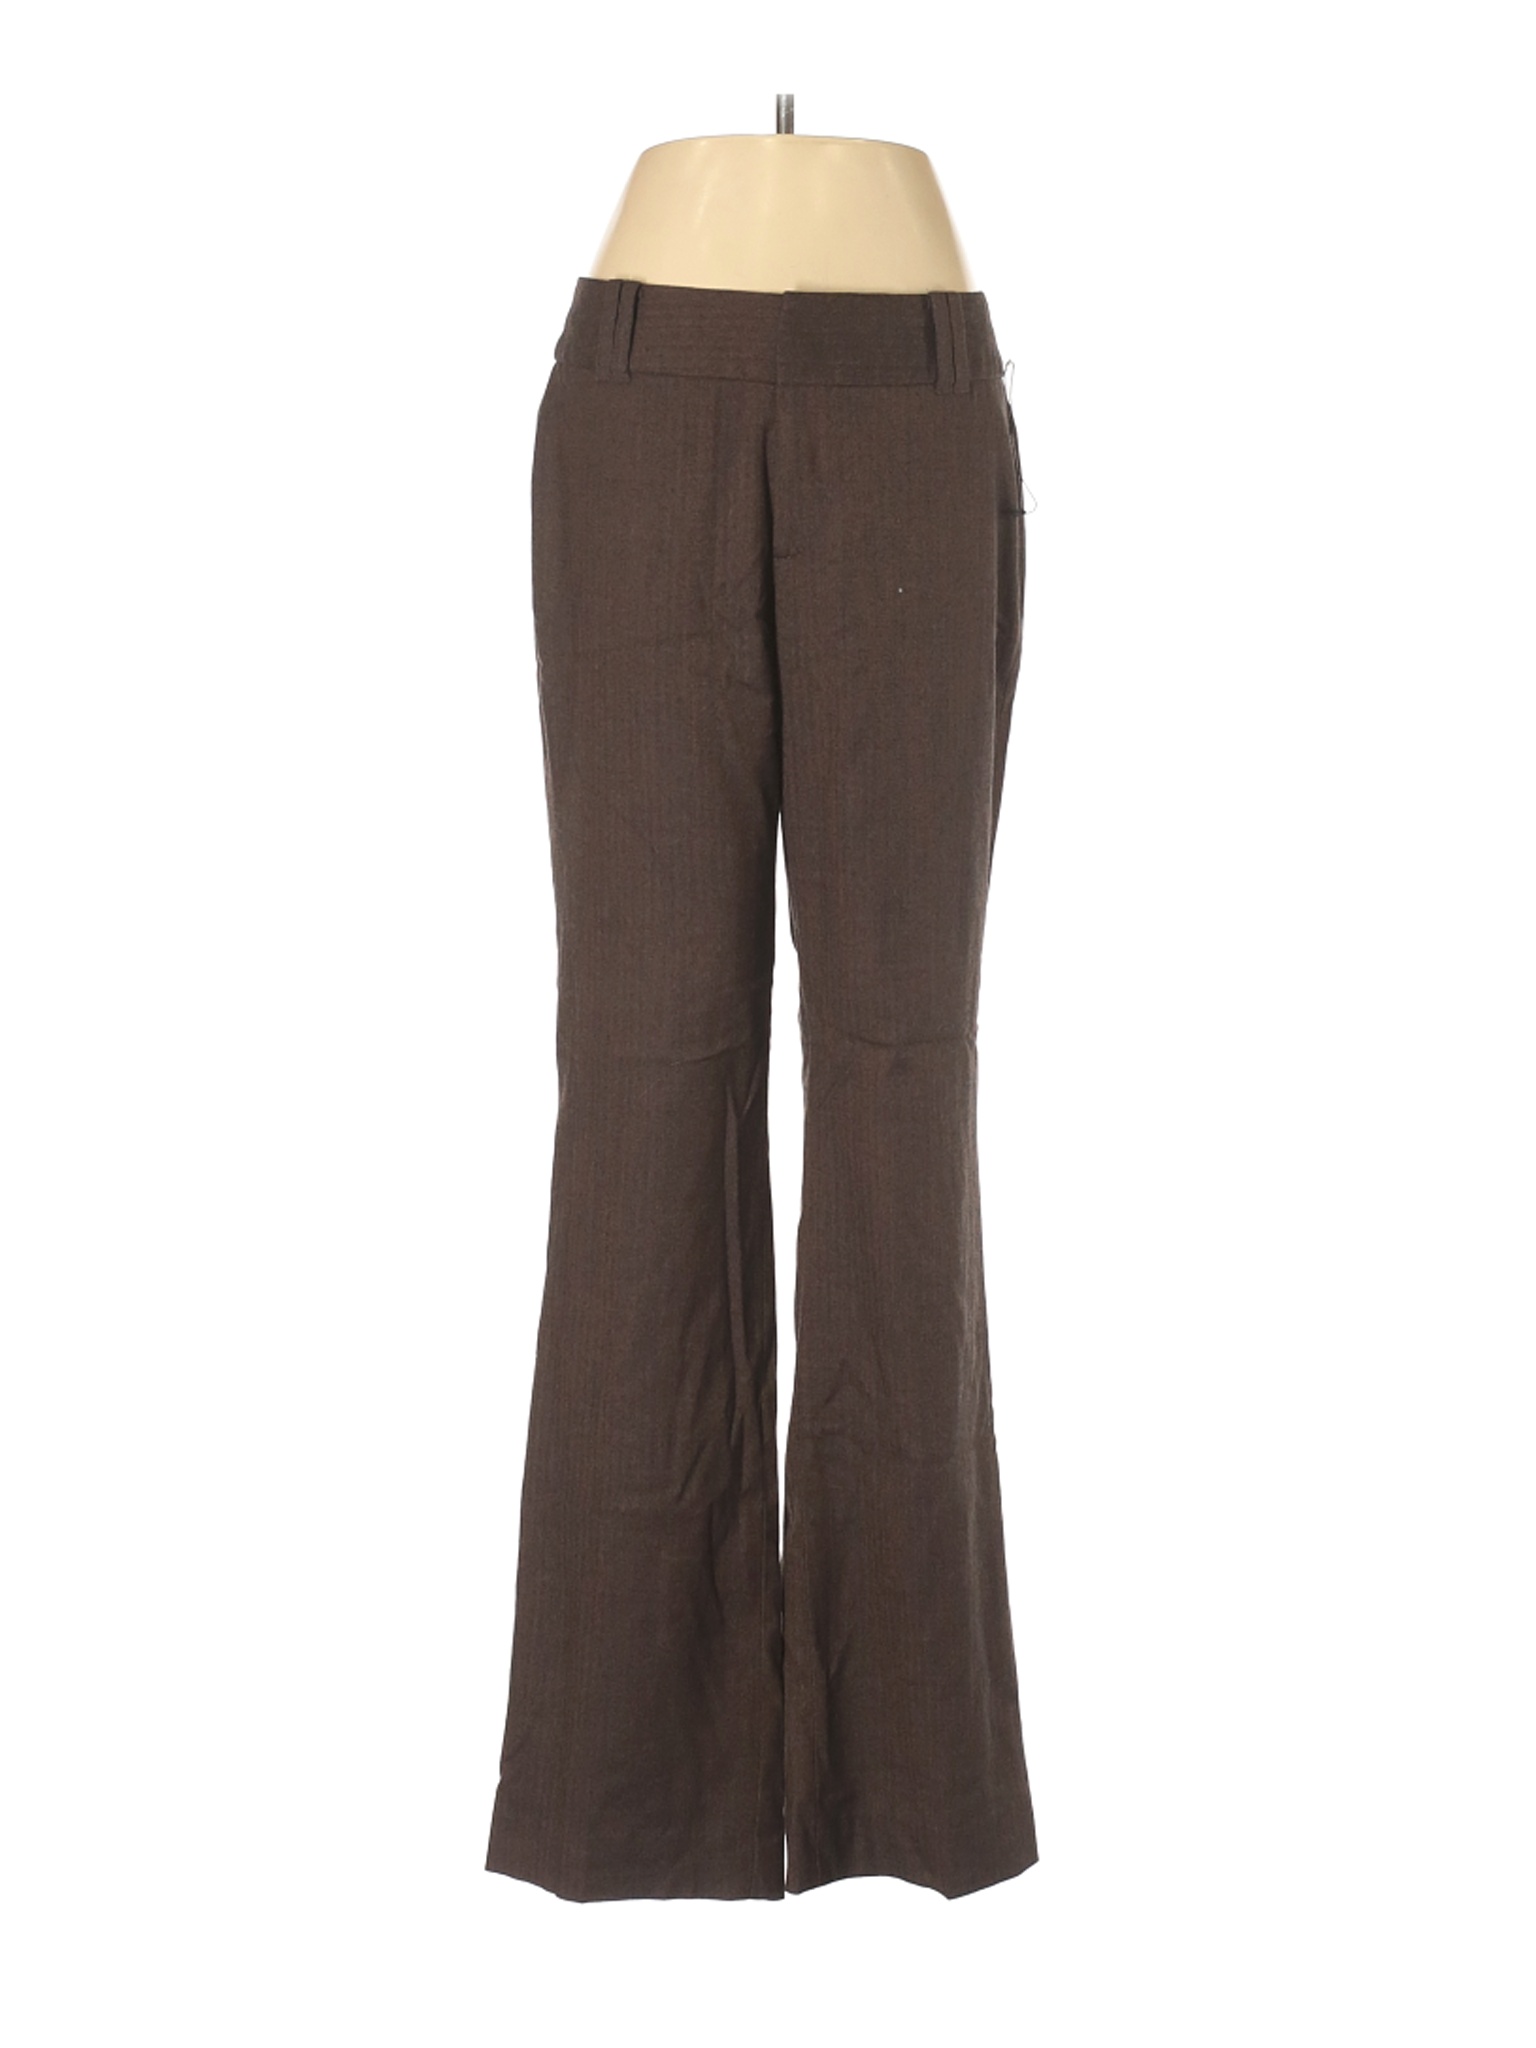 NWT Banana Republic Women Brown Wool Pants 6 | eBay